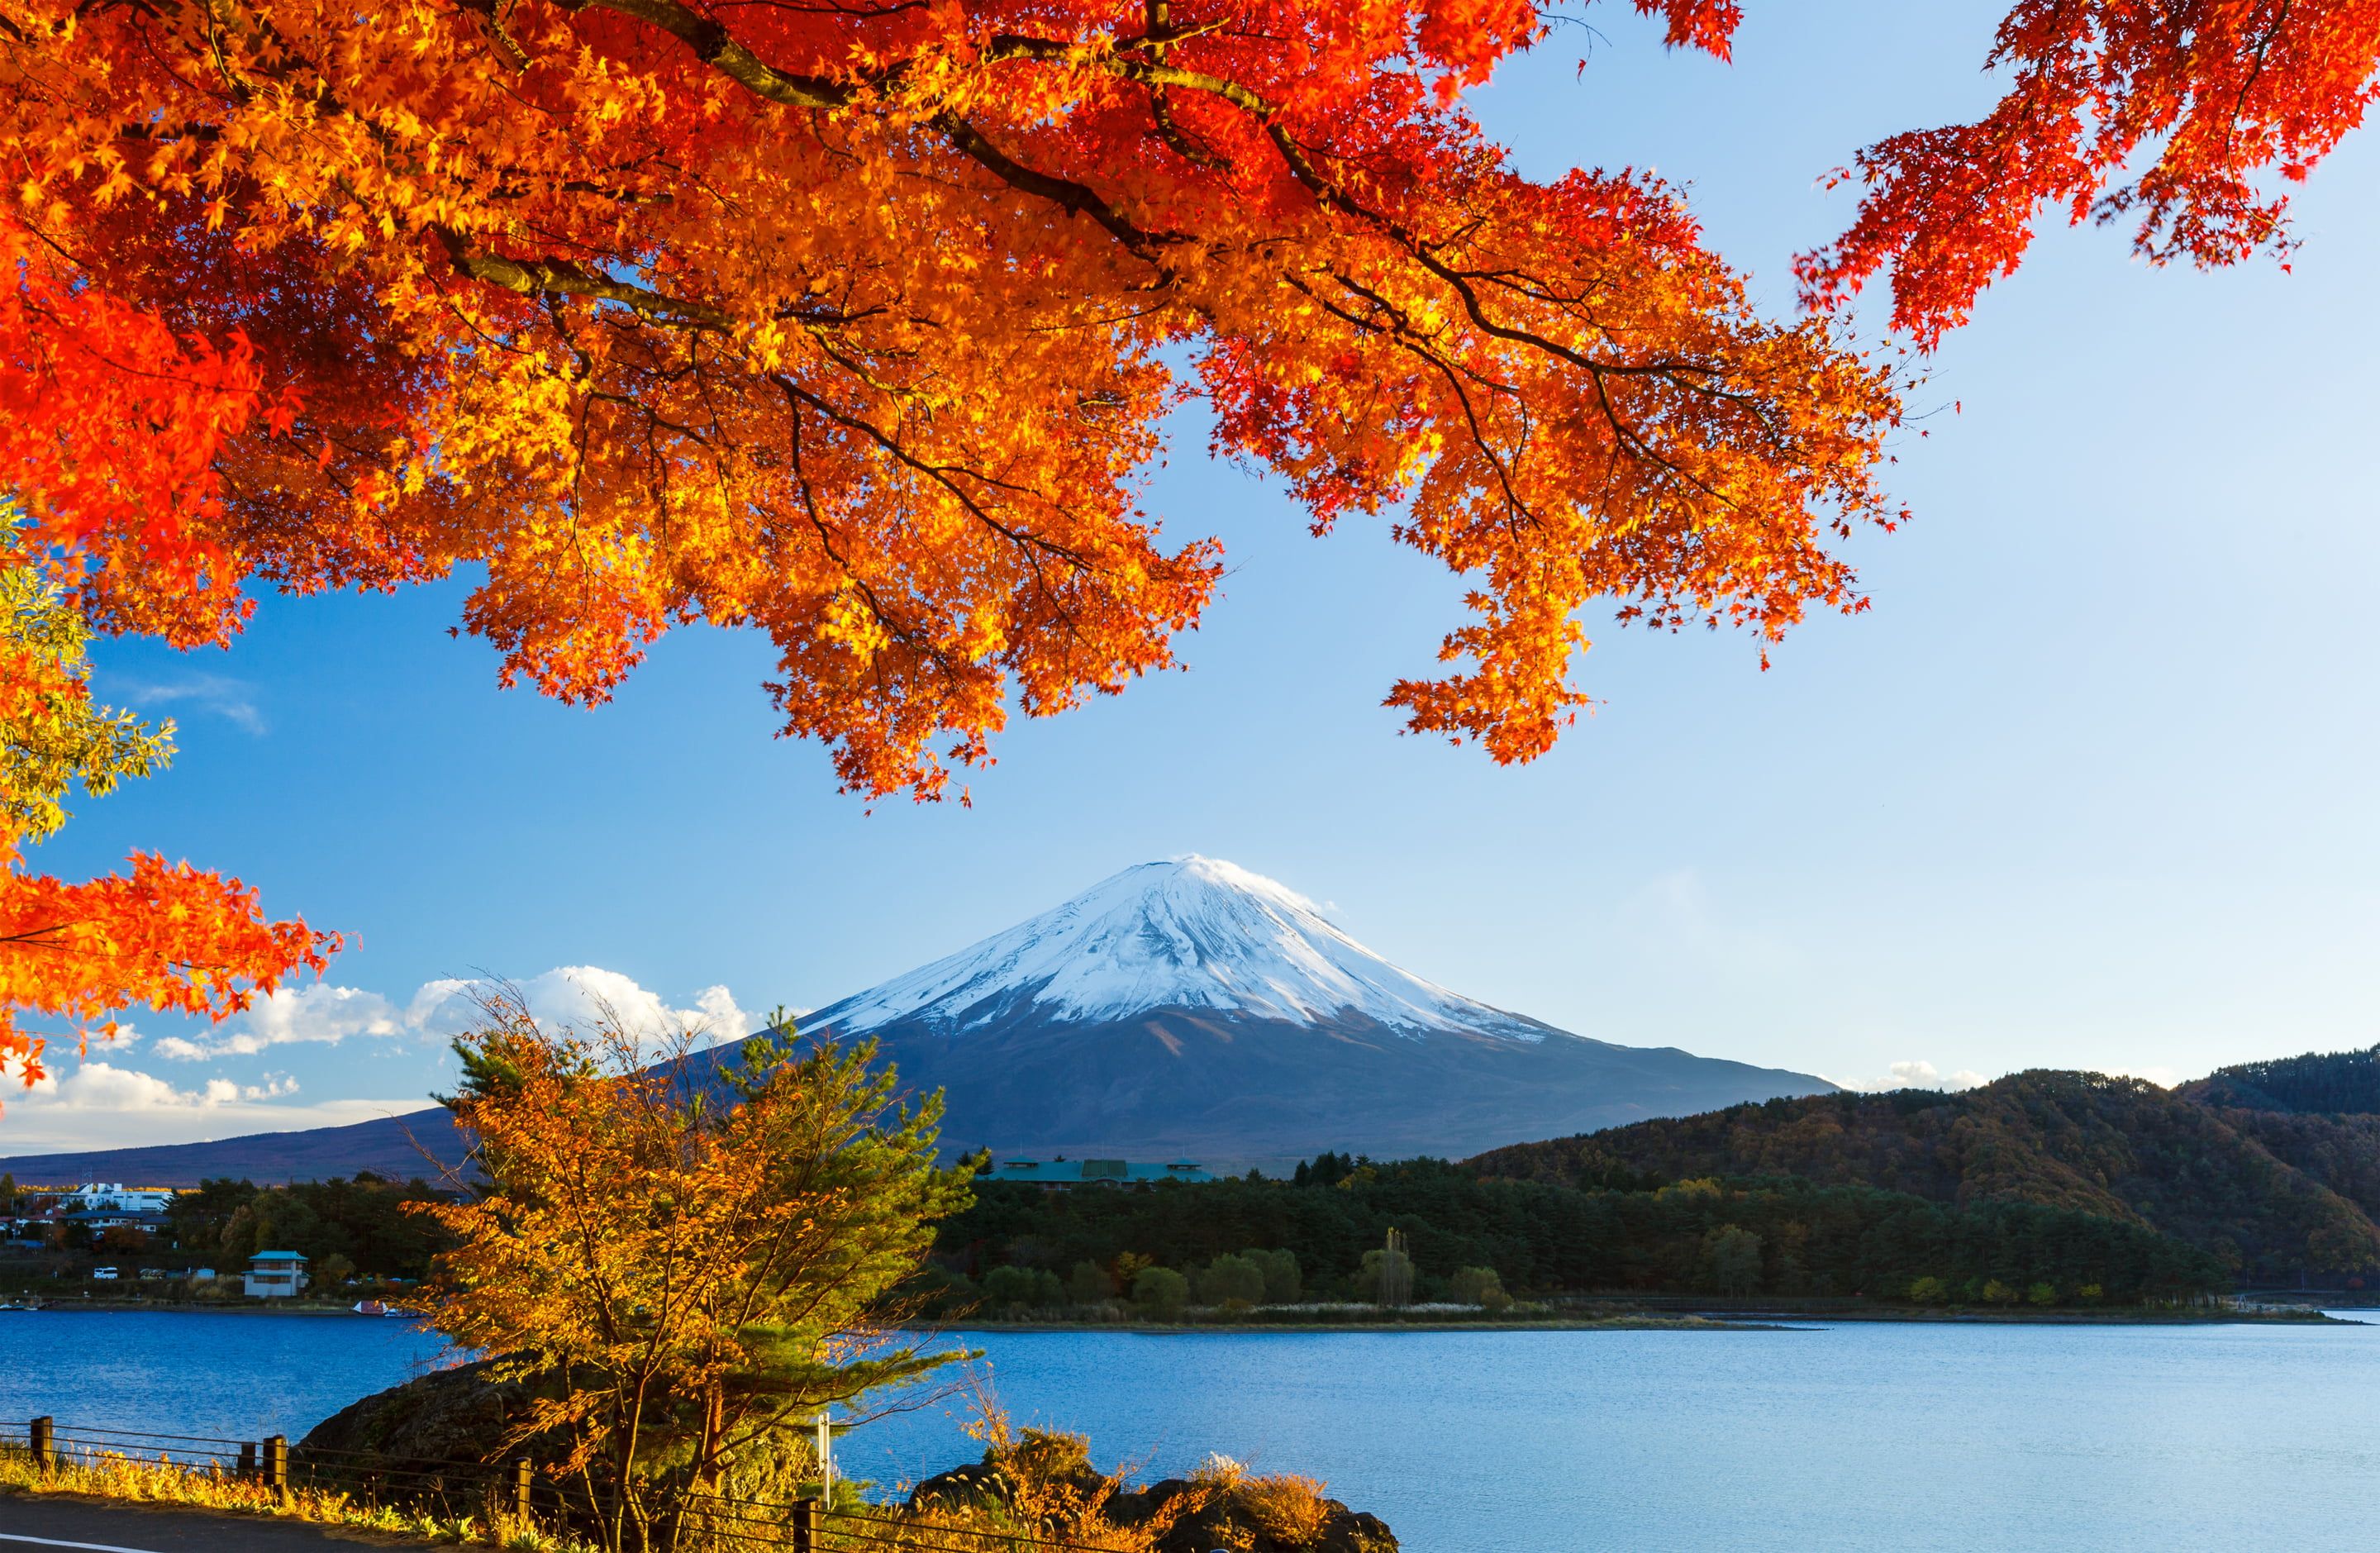 Mt. Fuji, Japan #autumn #forest the sky #leaves #snow #trees #lake #Japan #mountain #Fuji K #wallpaper #hdwallpaper #des. Mountain wallpaper, HD wallpaper, Fuji